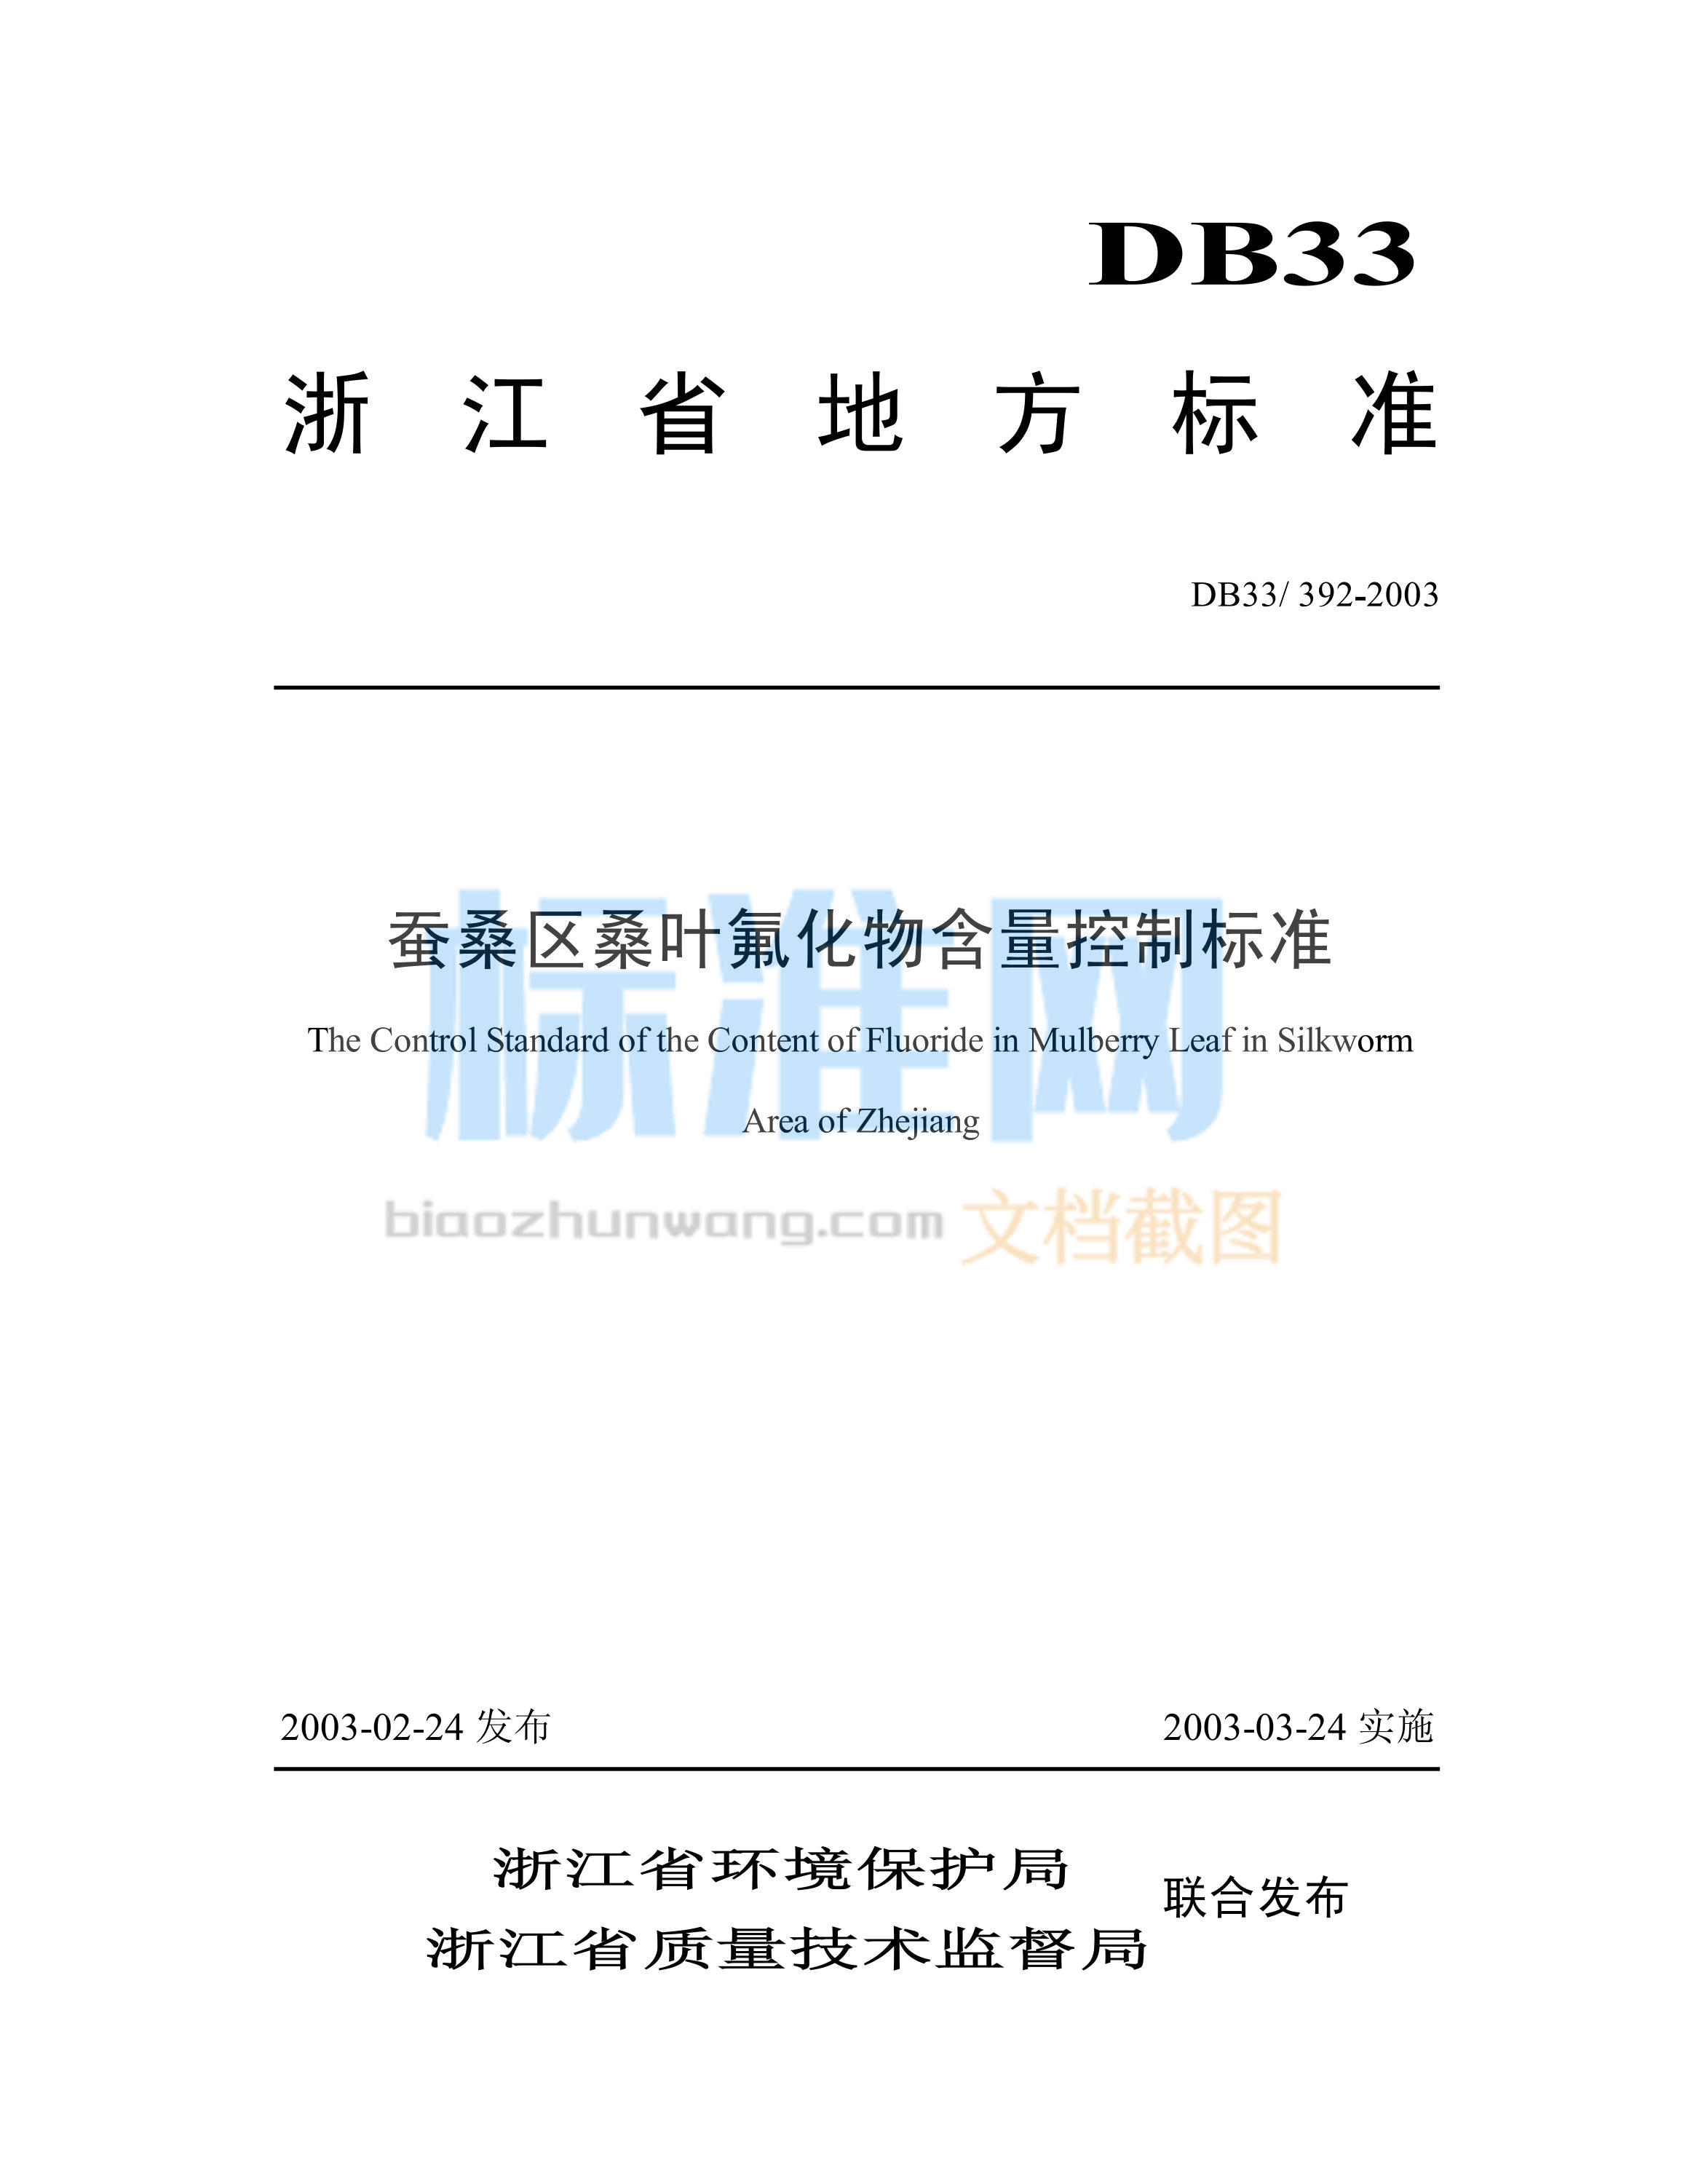 DB33/392-2003 桑蚕区桑叶氟化物含量控制标准